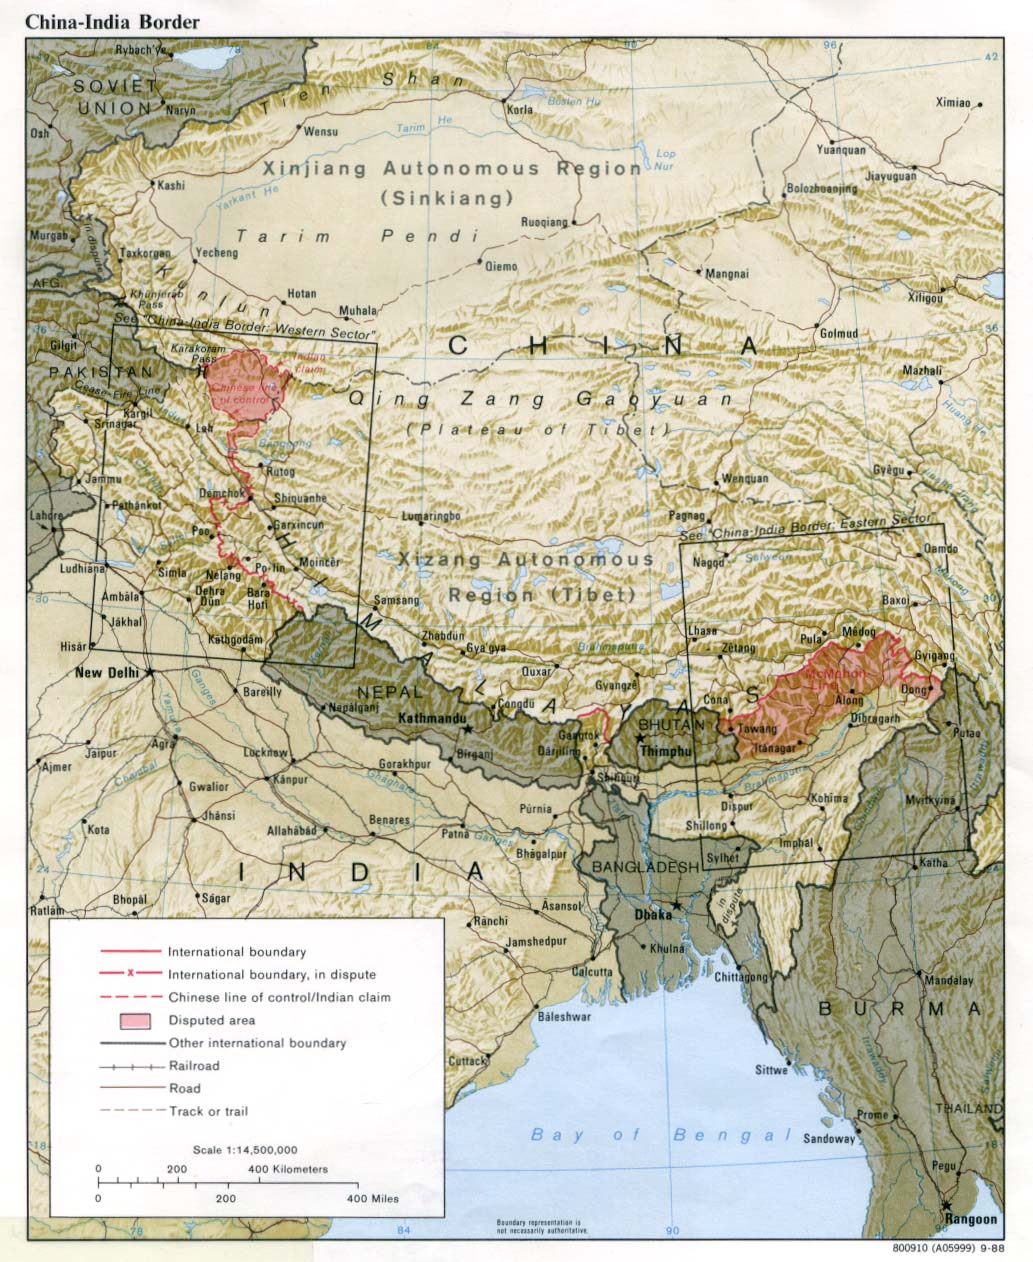                                     'India-China Border' 
India_China_Kashmir_&_NEFA_(North_East_Frontier_Agency)_Border_Himalayas 